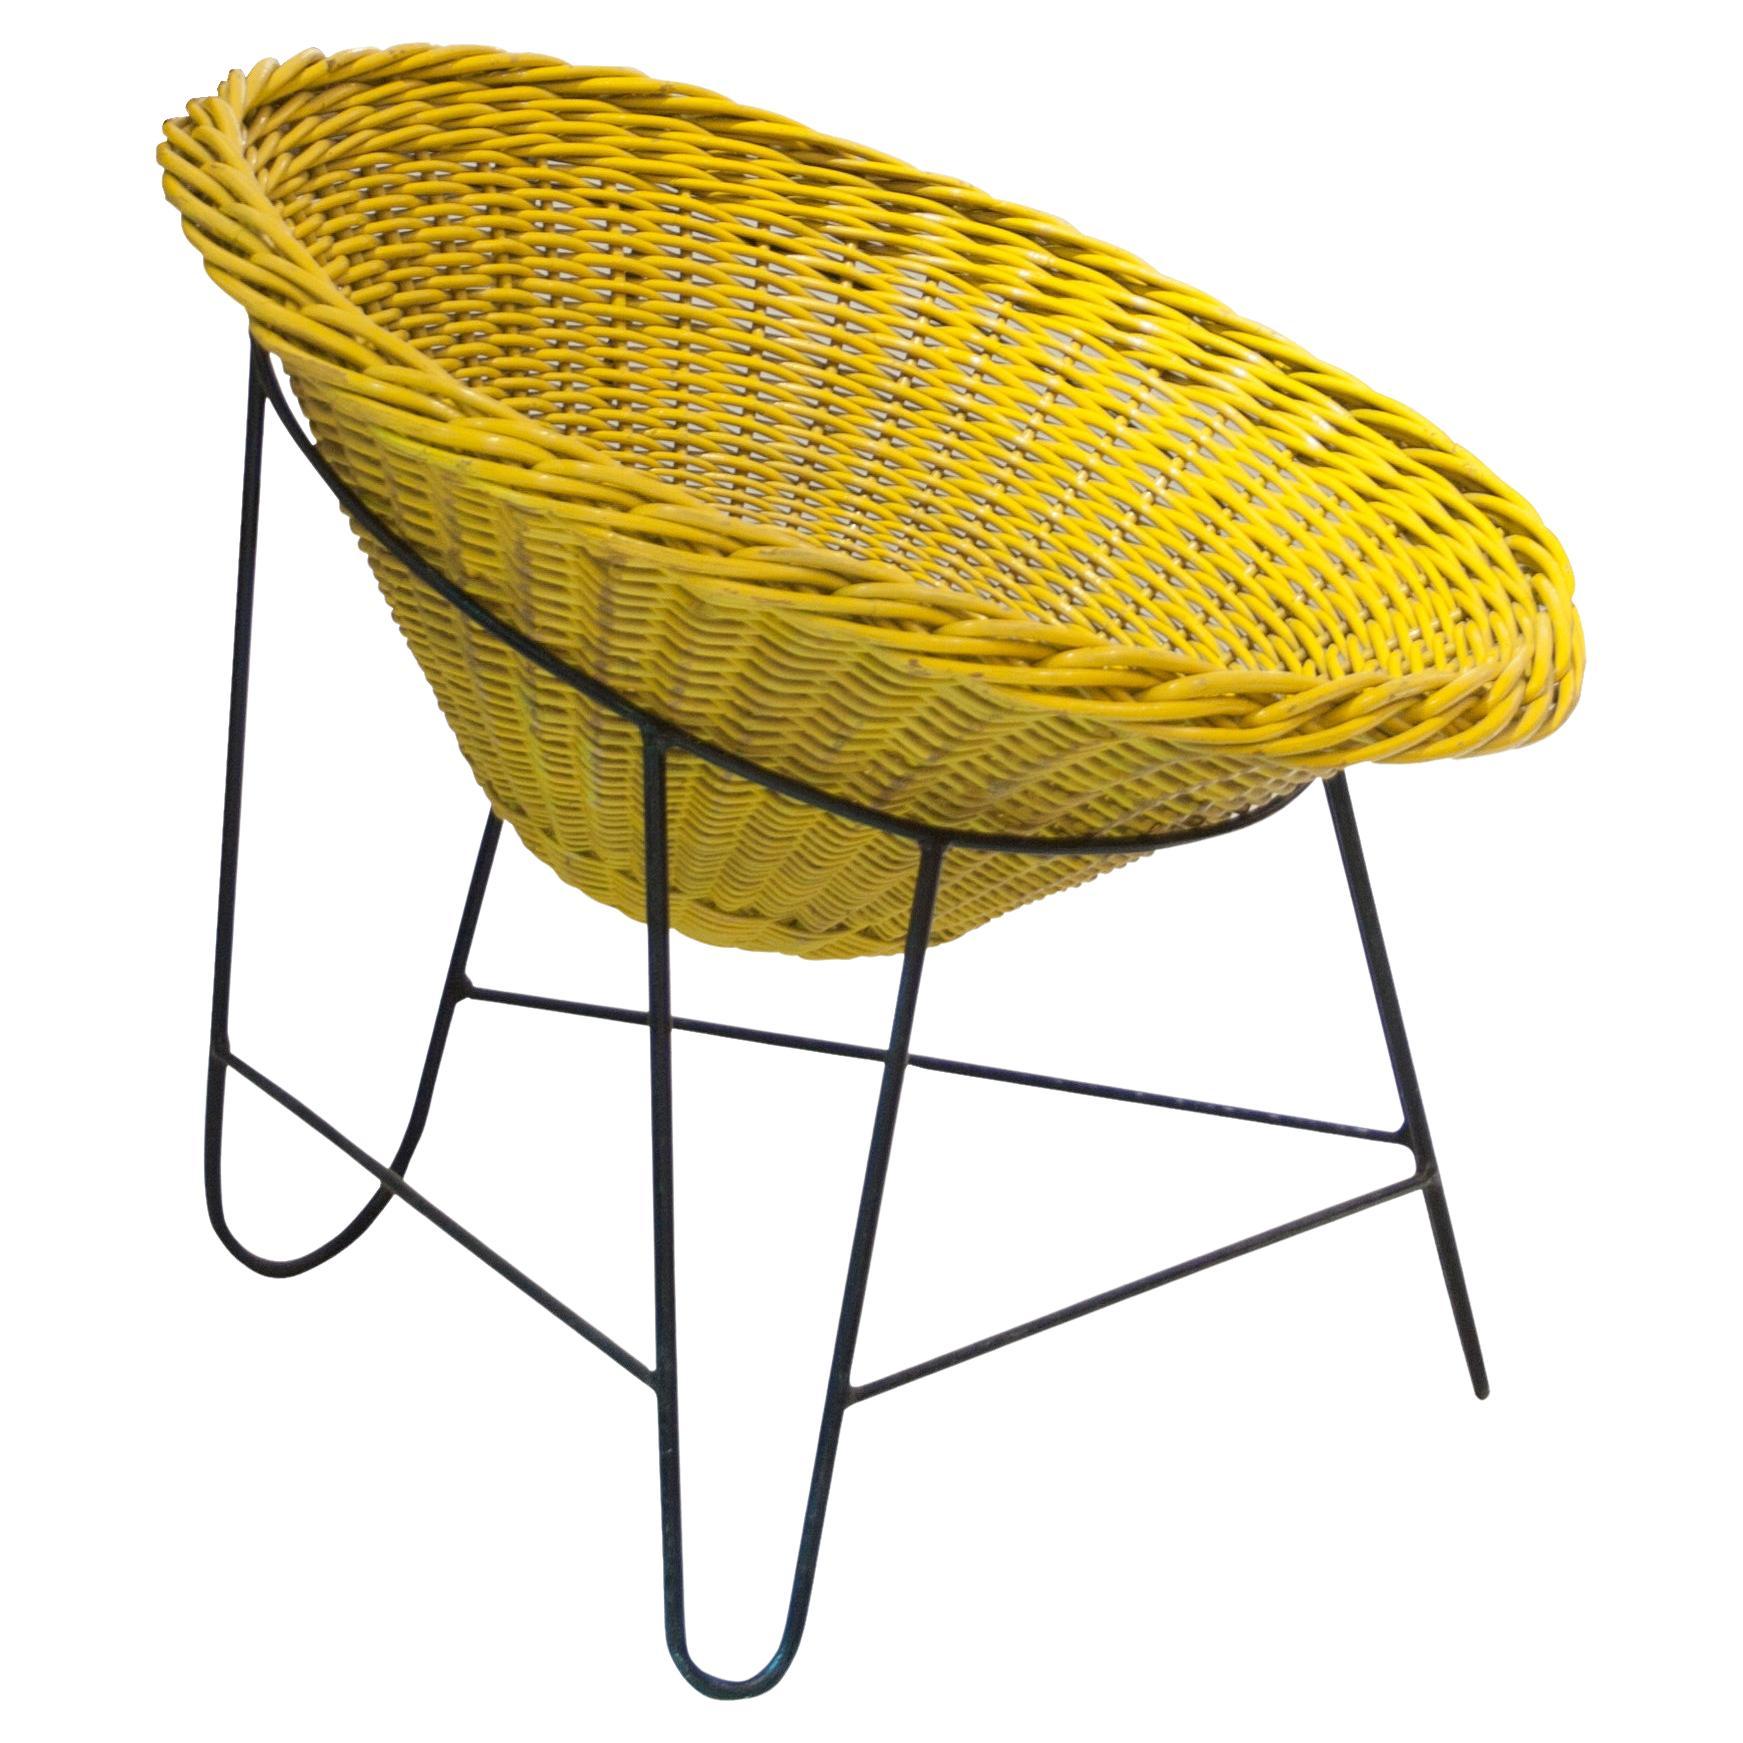 Mathieu Matégot "Wicker" Chair Made with Iron and Natural Fiber, France, 1950 For Sale